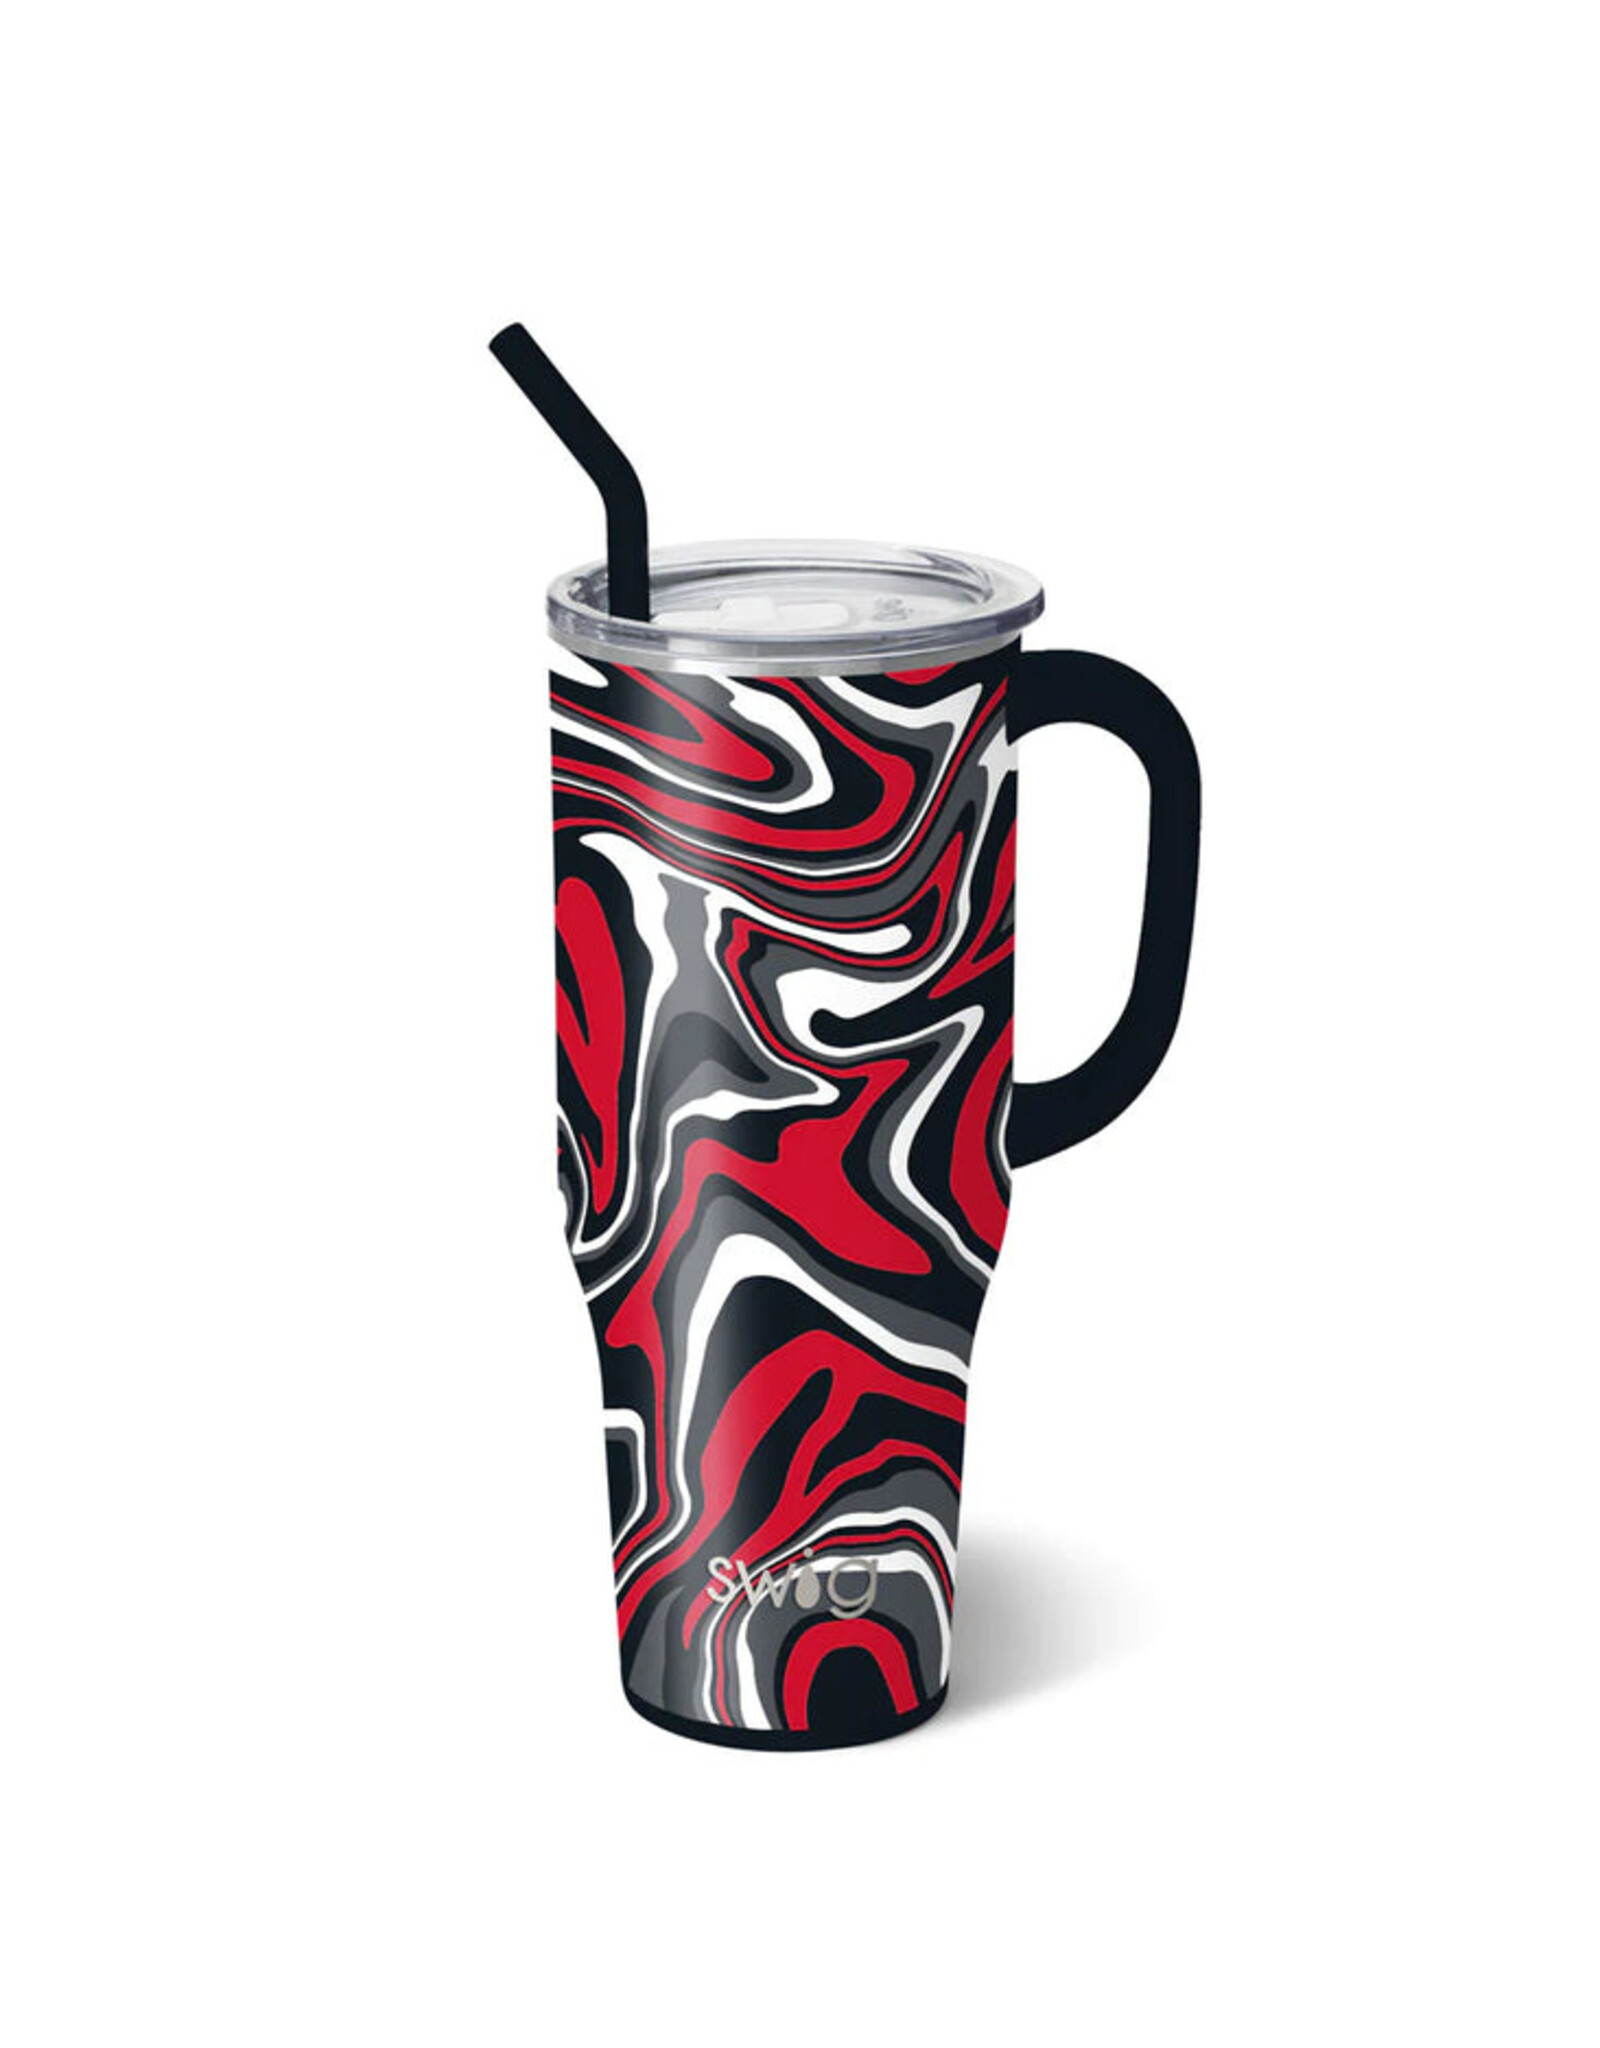 Swig Fanzone Black + Red Mega Mug (40oz) - Blanton-Caldwell